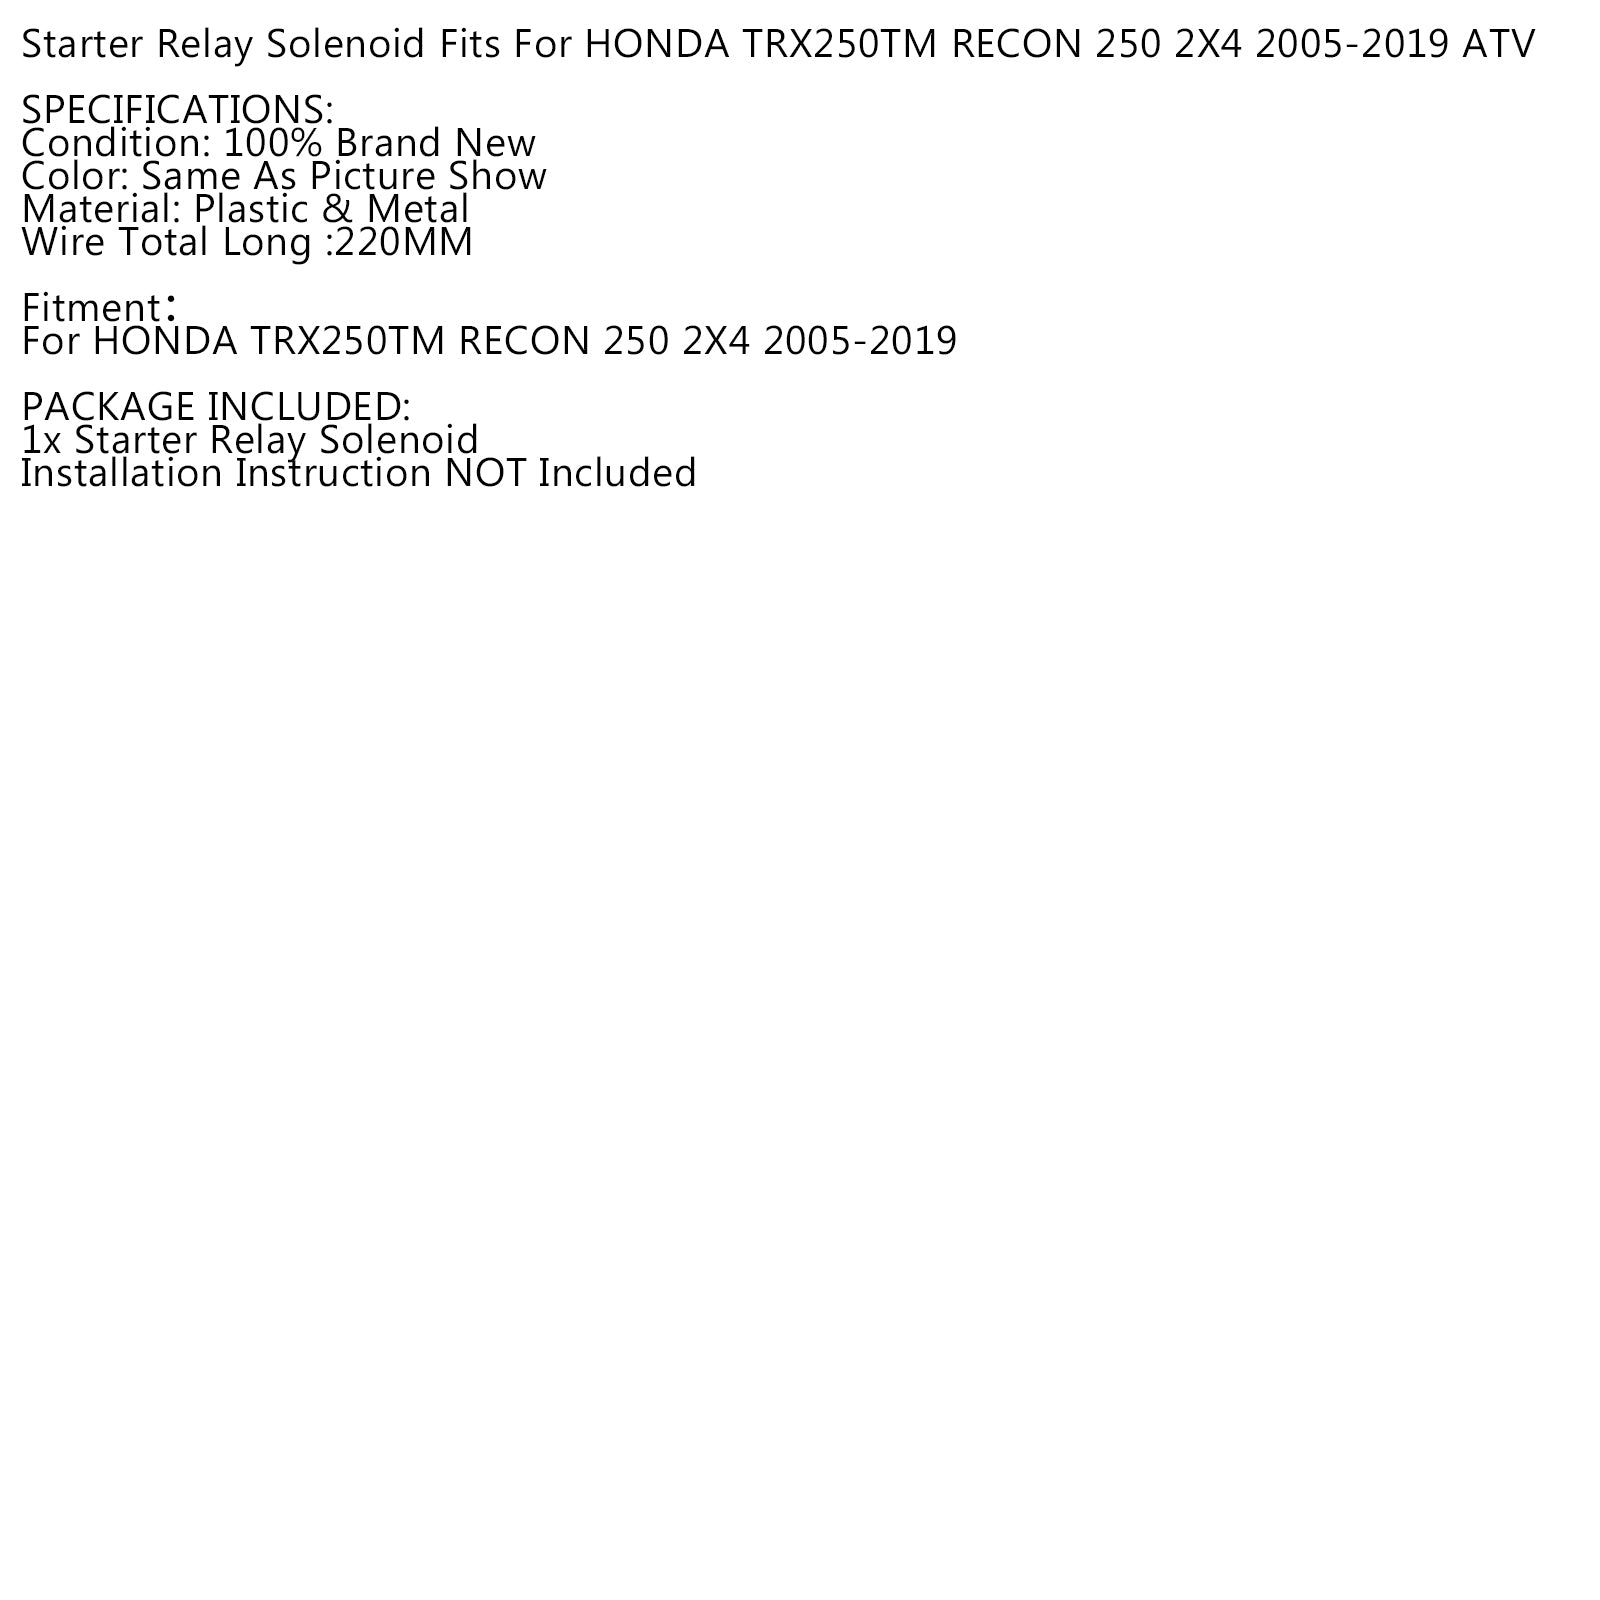 Solenoide relè di avviamento per HONDA TRX250TM TRX250 TM RECON 250 2005-2019 2X4 ATV